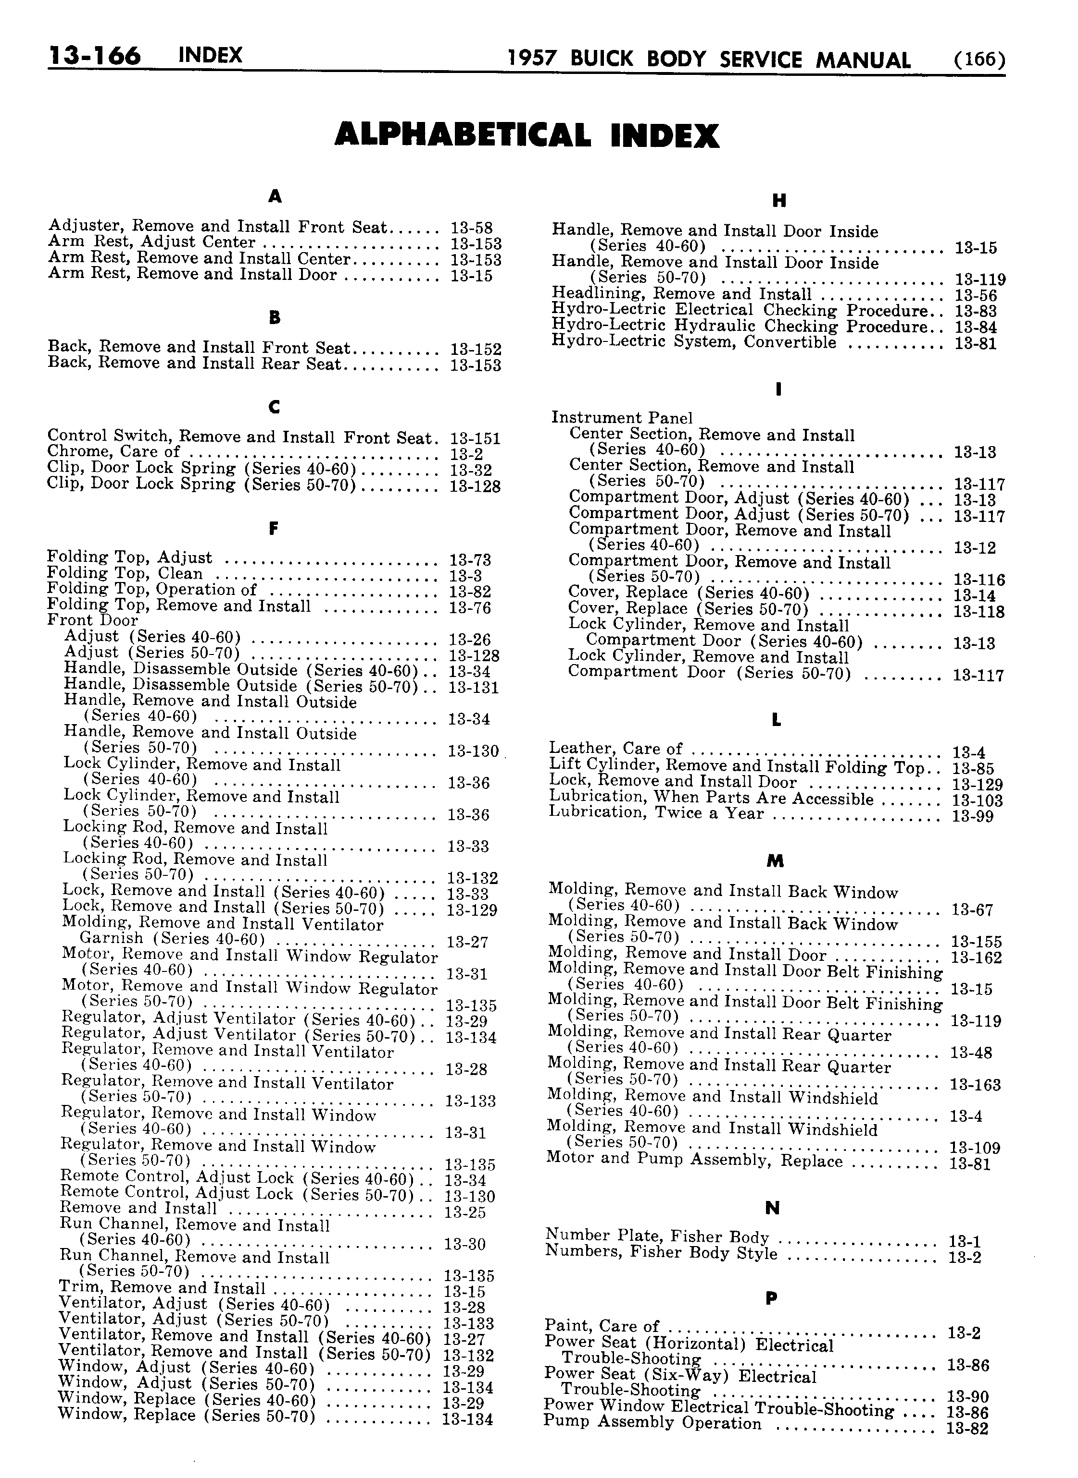 n_1957 Buick Body Service Manual-168-168.jpg